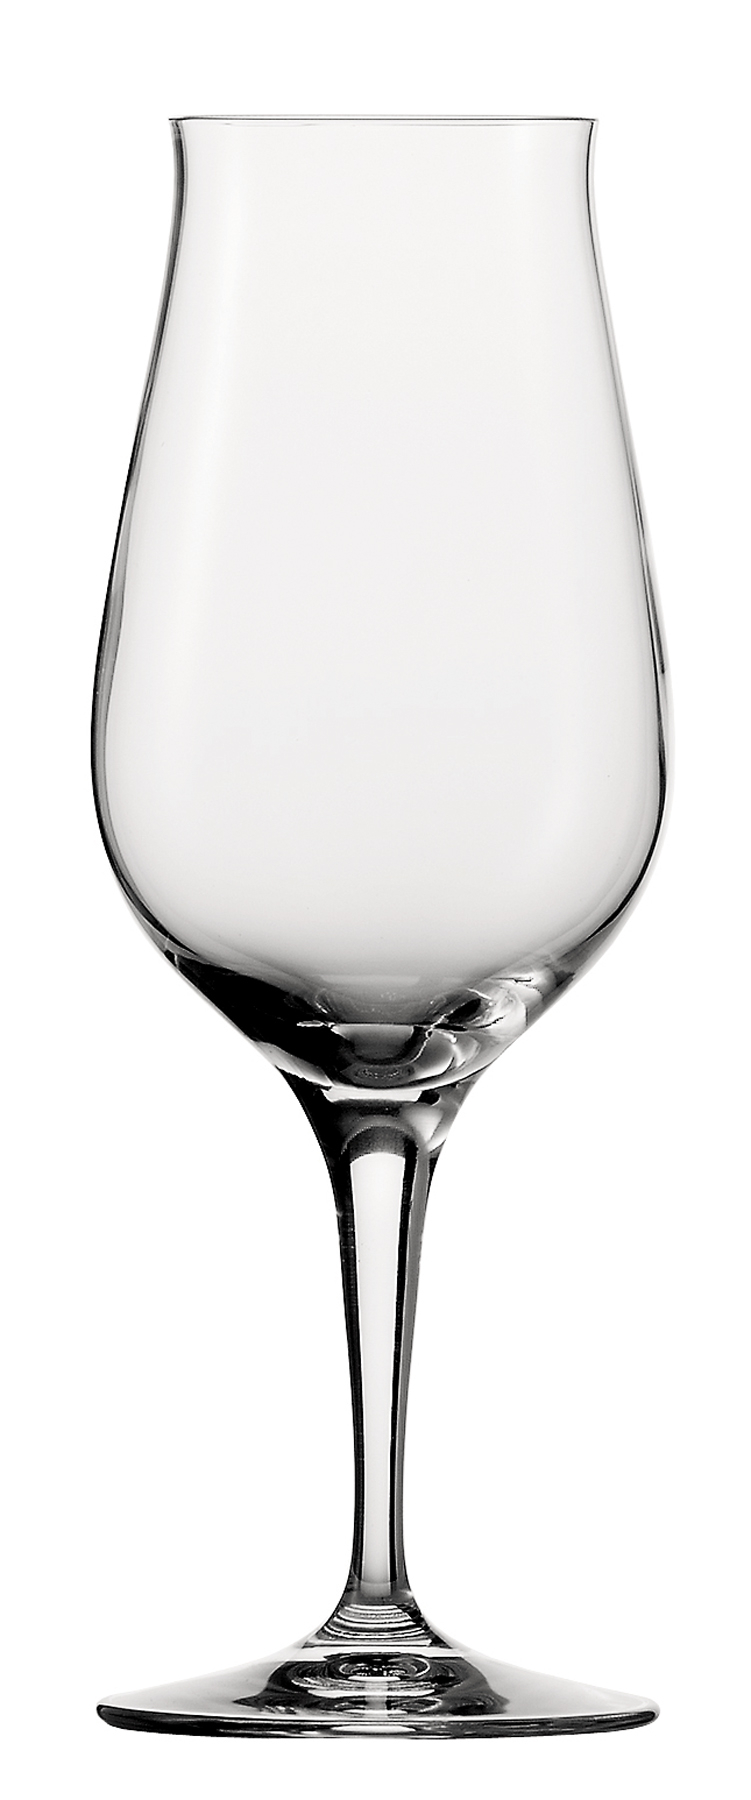 Whisky Snifter Premium, Spiegelau Special Glasses - 280ml